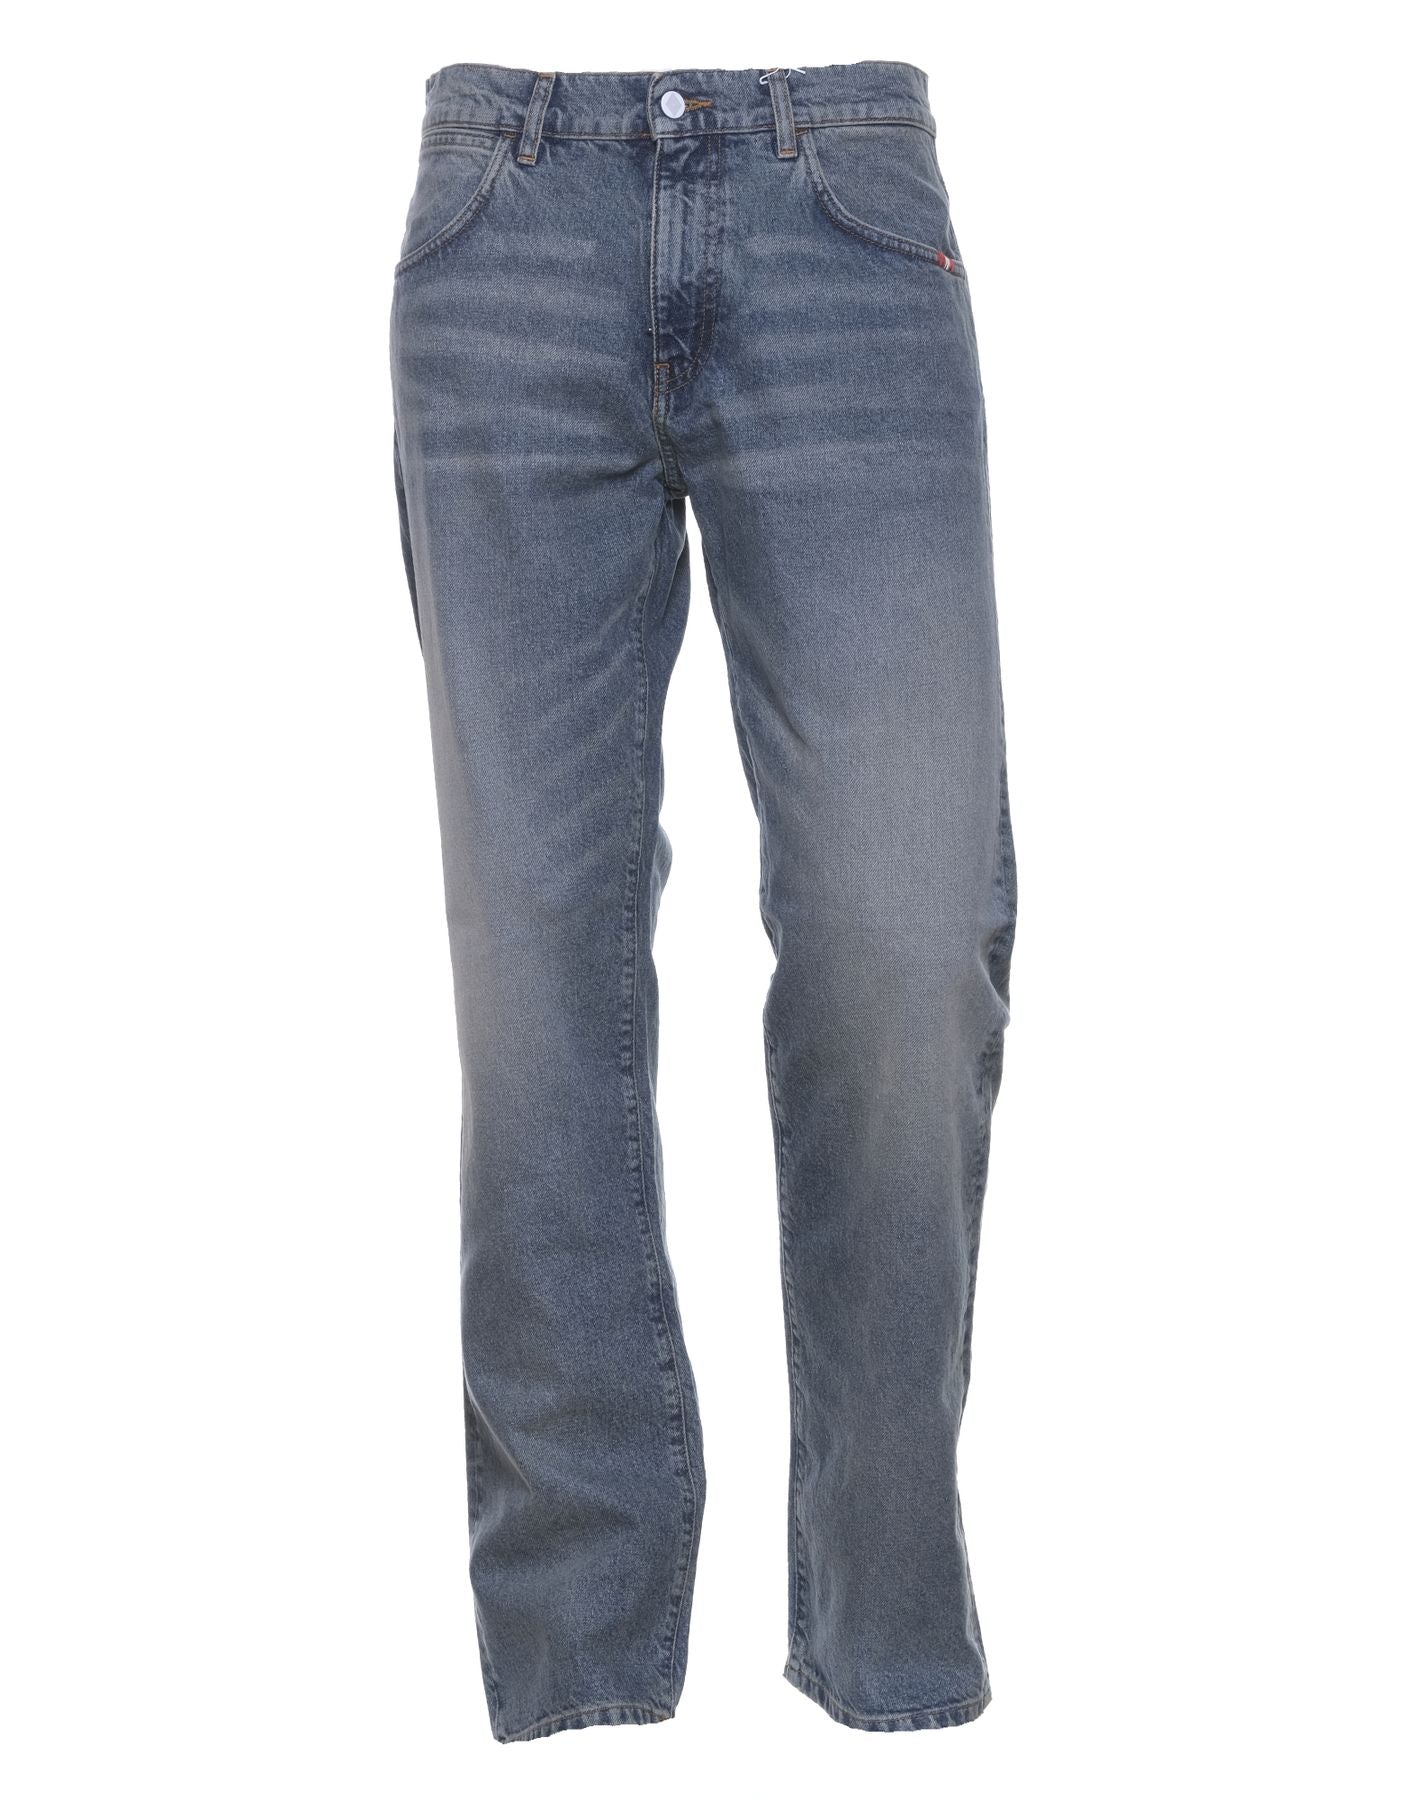 Jeans für Mann AMU010D4692504 Super Dirty Amish